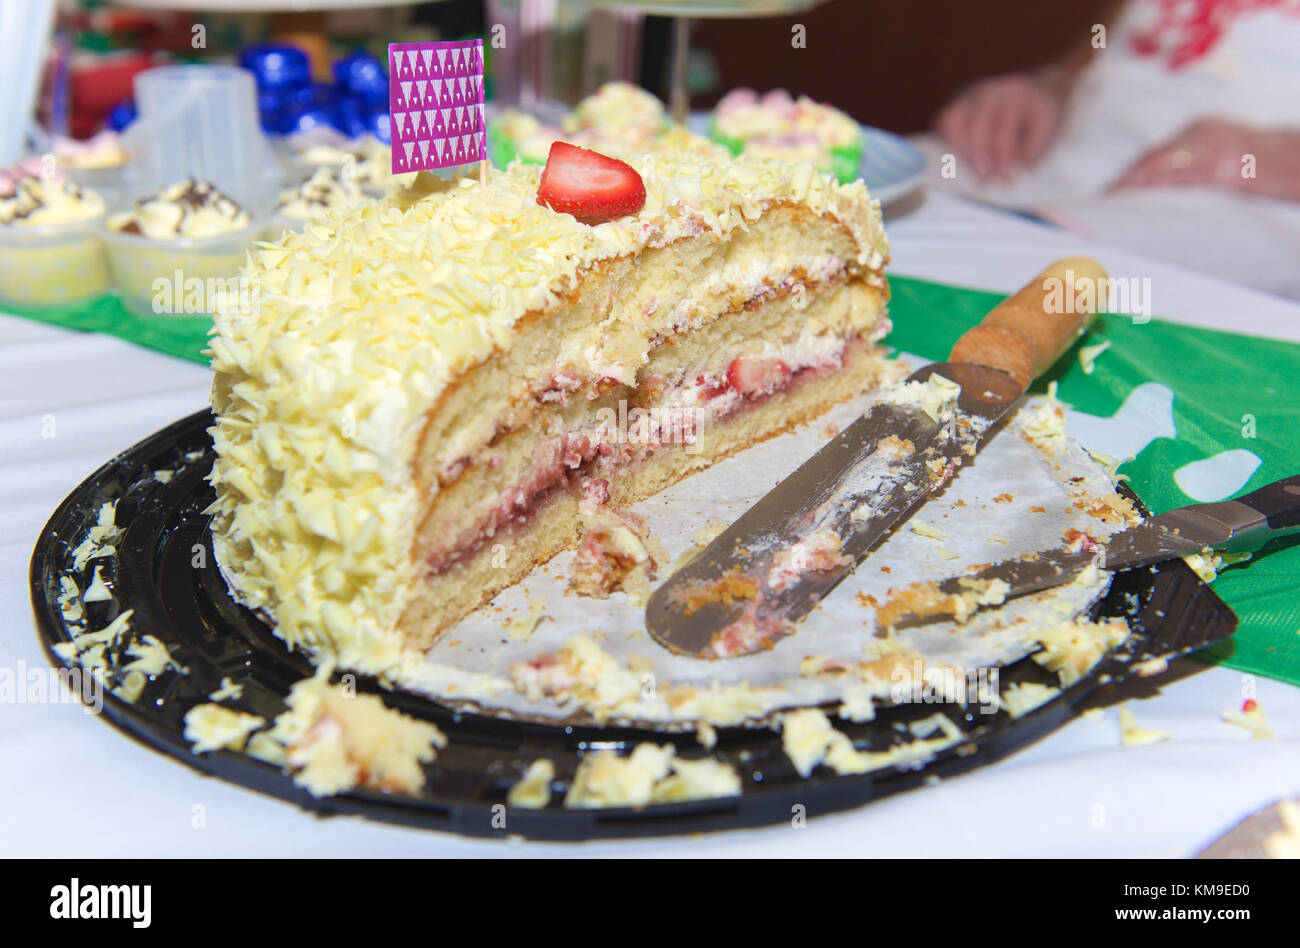 Half eaten birthday cake Stock Photo